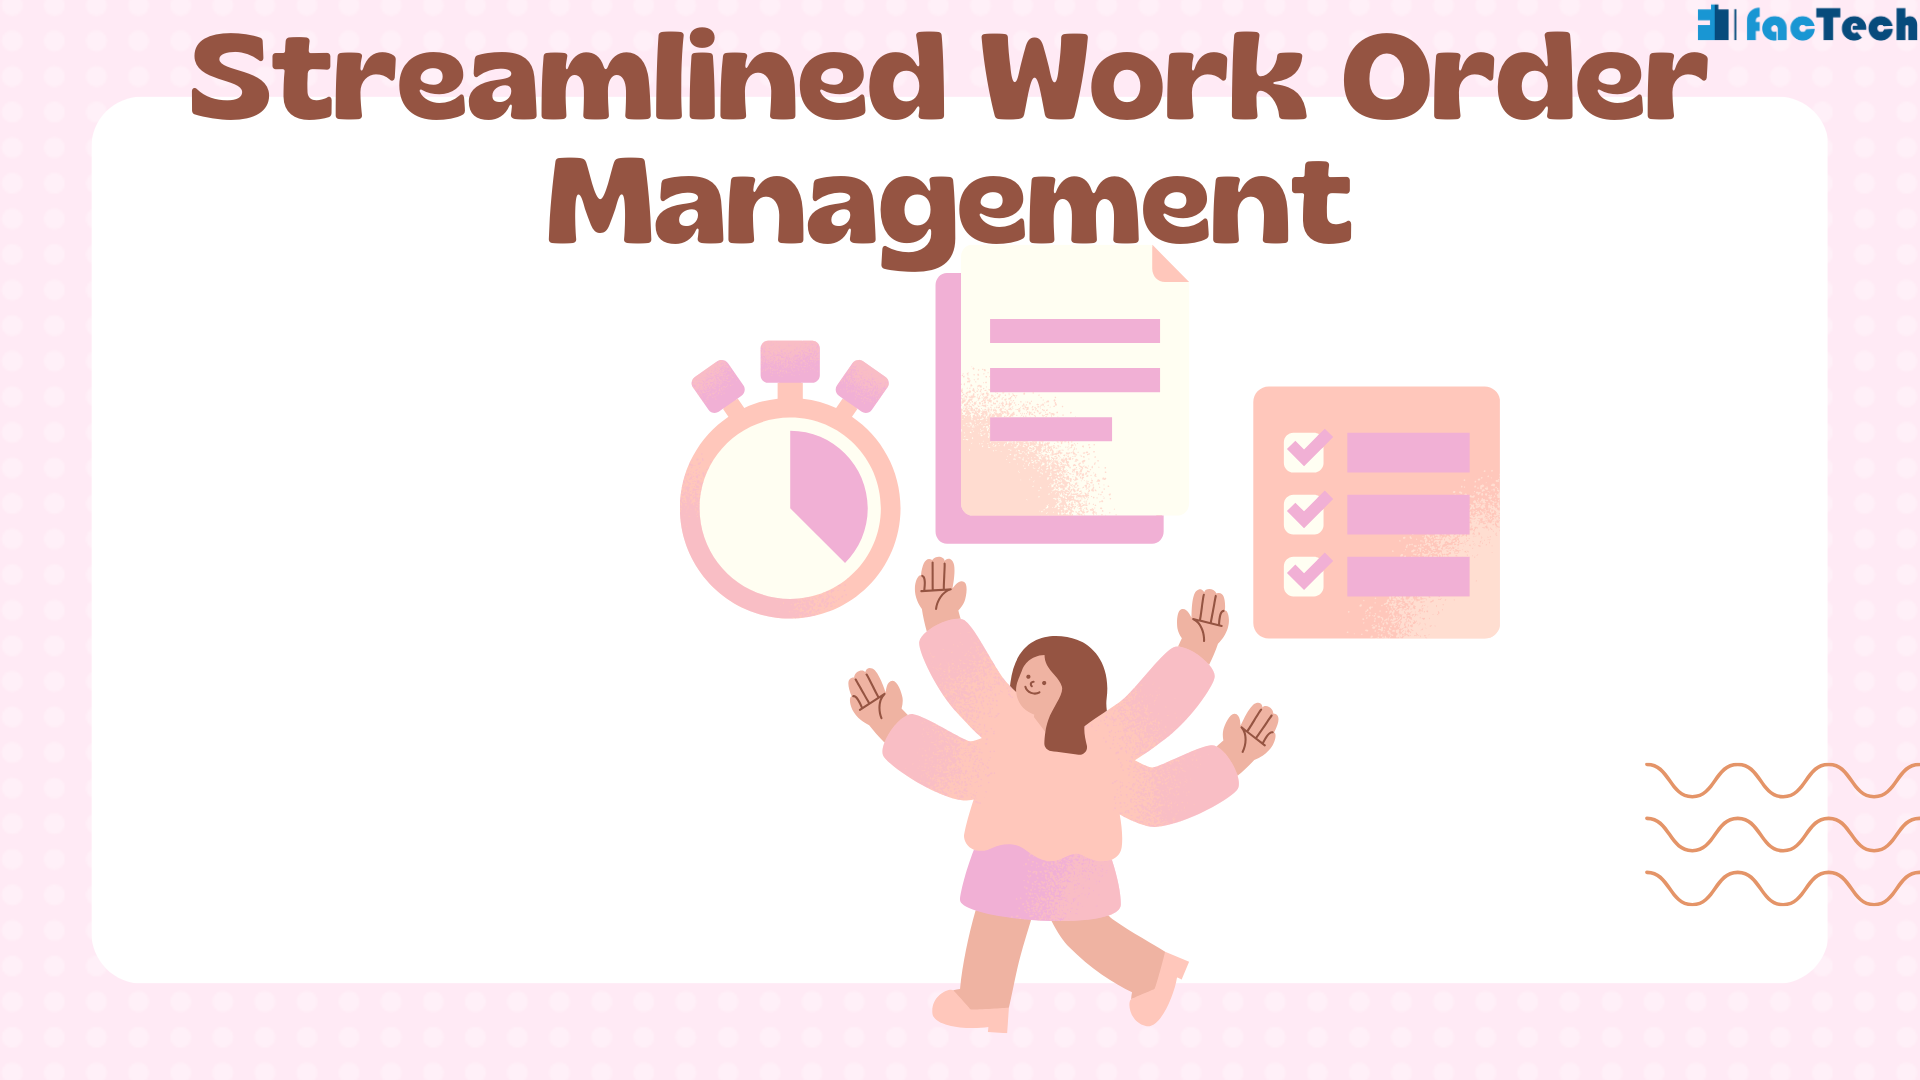 Streamlined Work Order Management using Facilities Management App